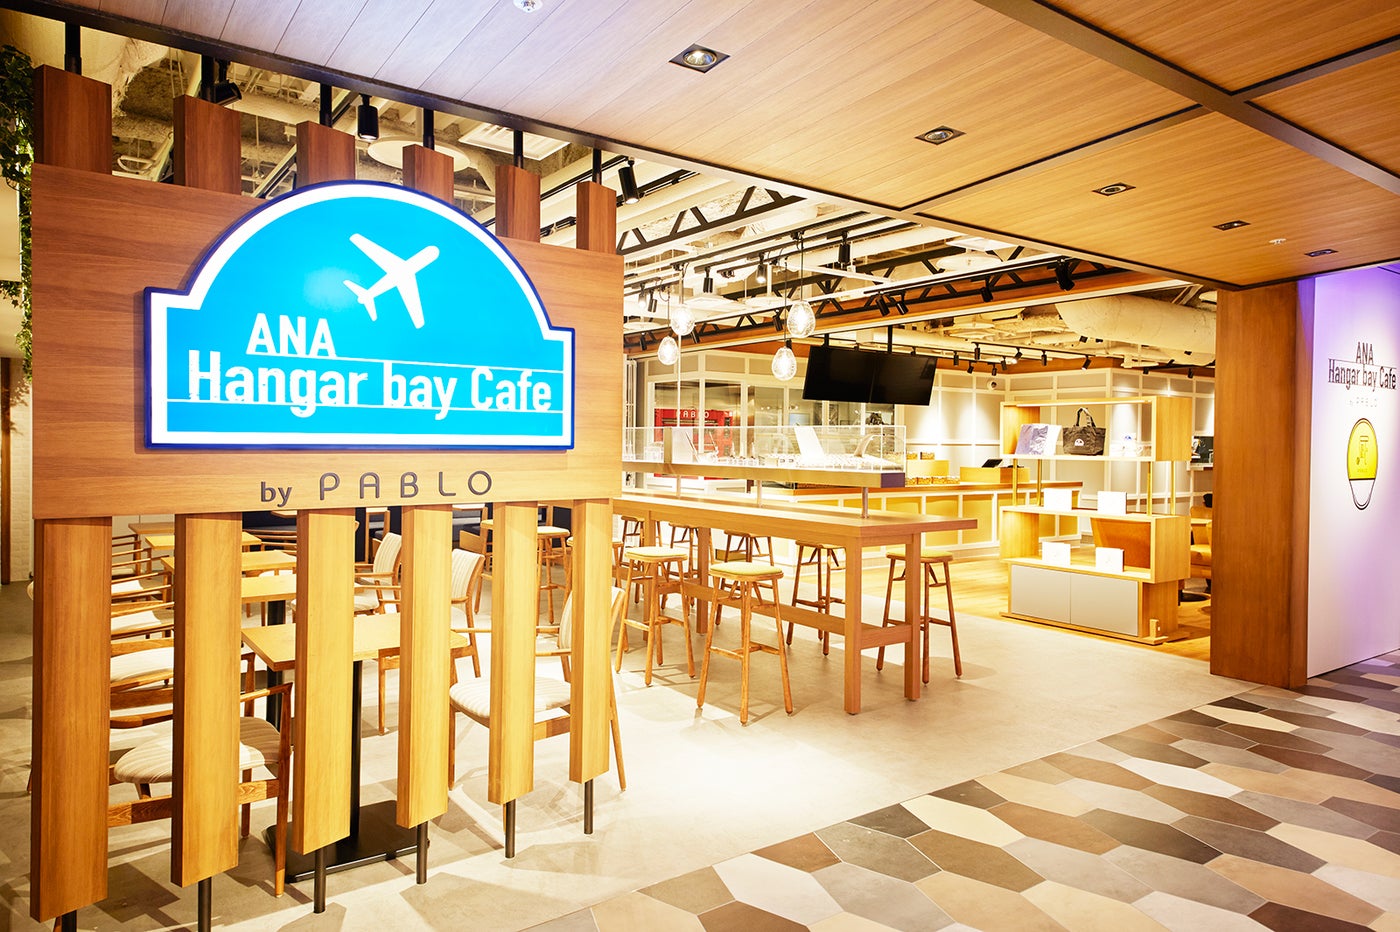 ANA Hangar bay Cafe by PABLO／画像提供：日本空港ビルデング